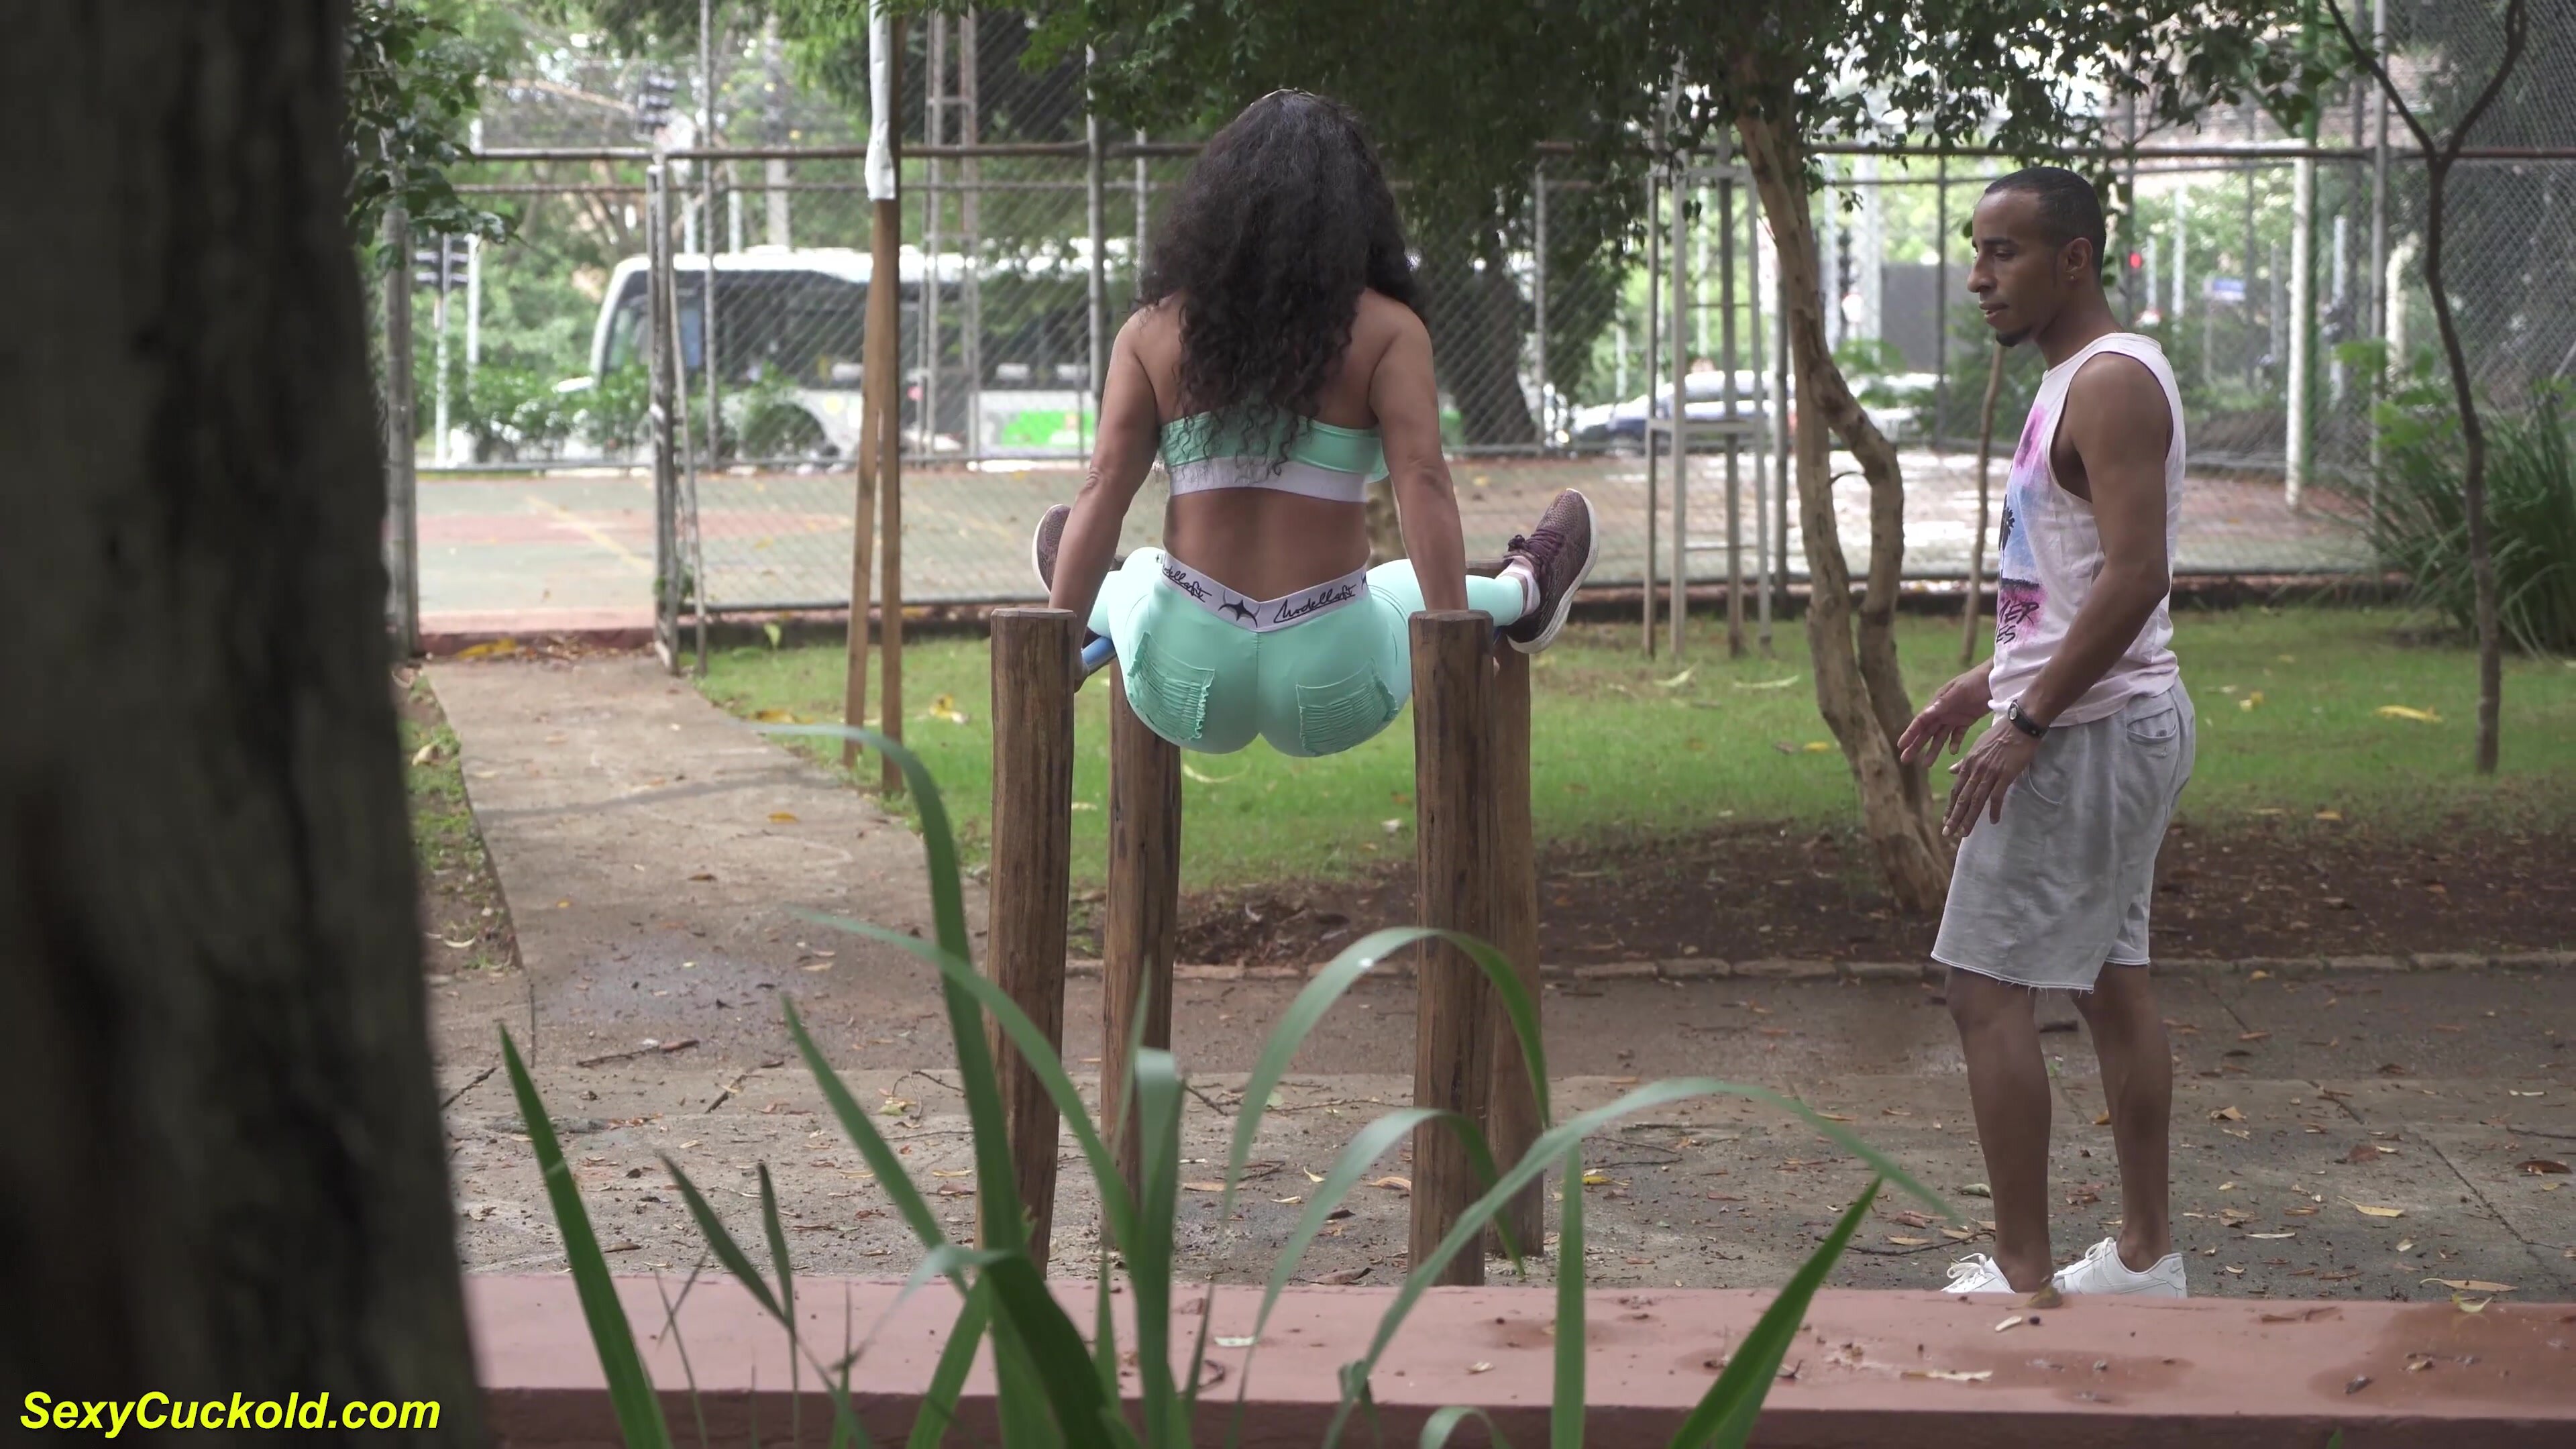 Sexy Cuckold - Brazilian muscle mom ass gets destroyed